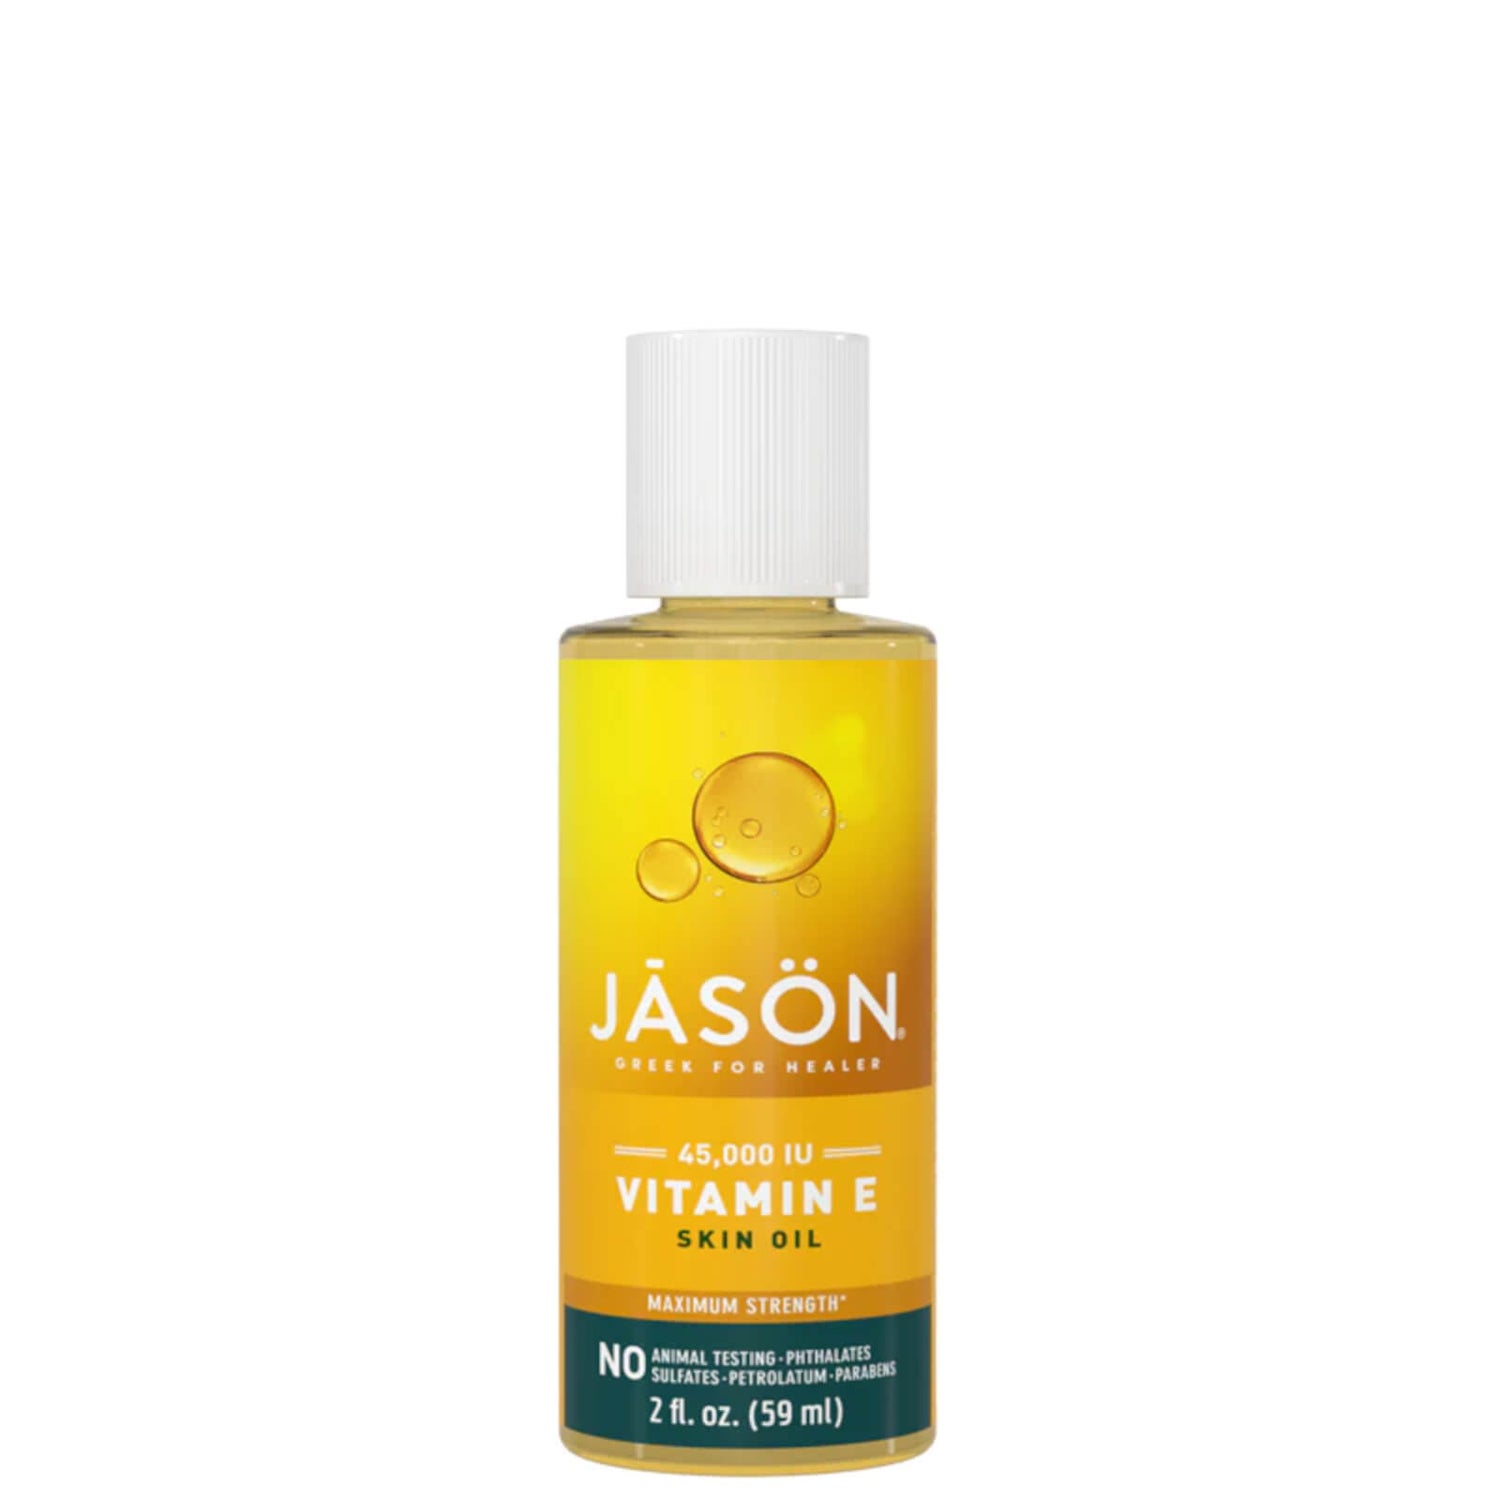 JASON Vitamin E 45,000iu Oil - Maximum Strength Oil (60 ml)